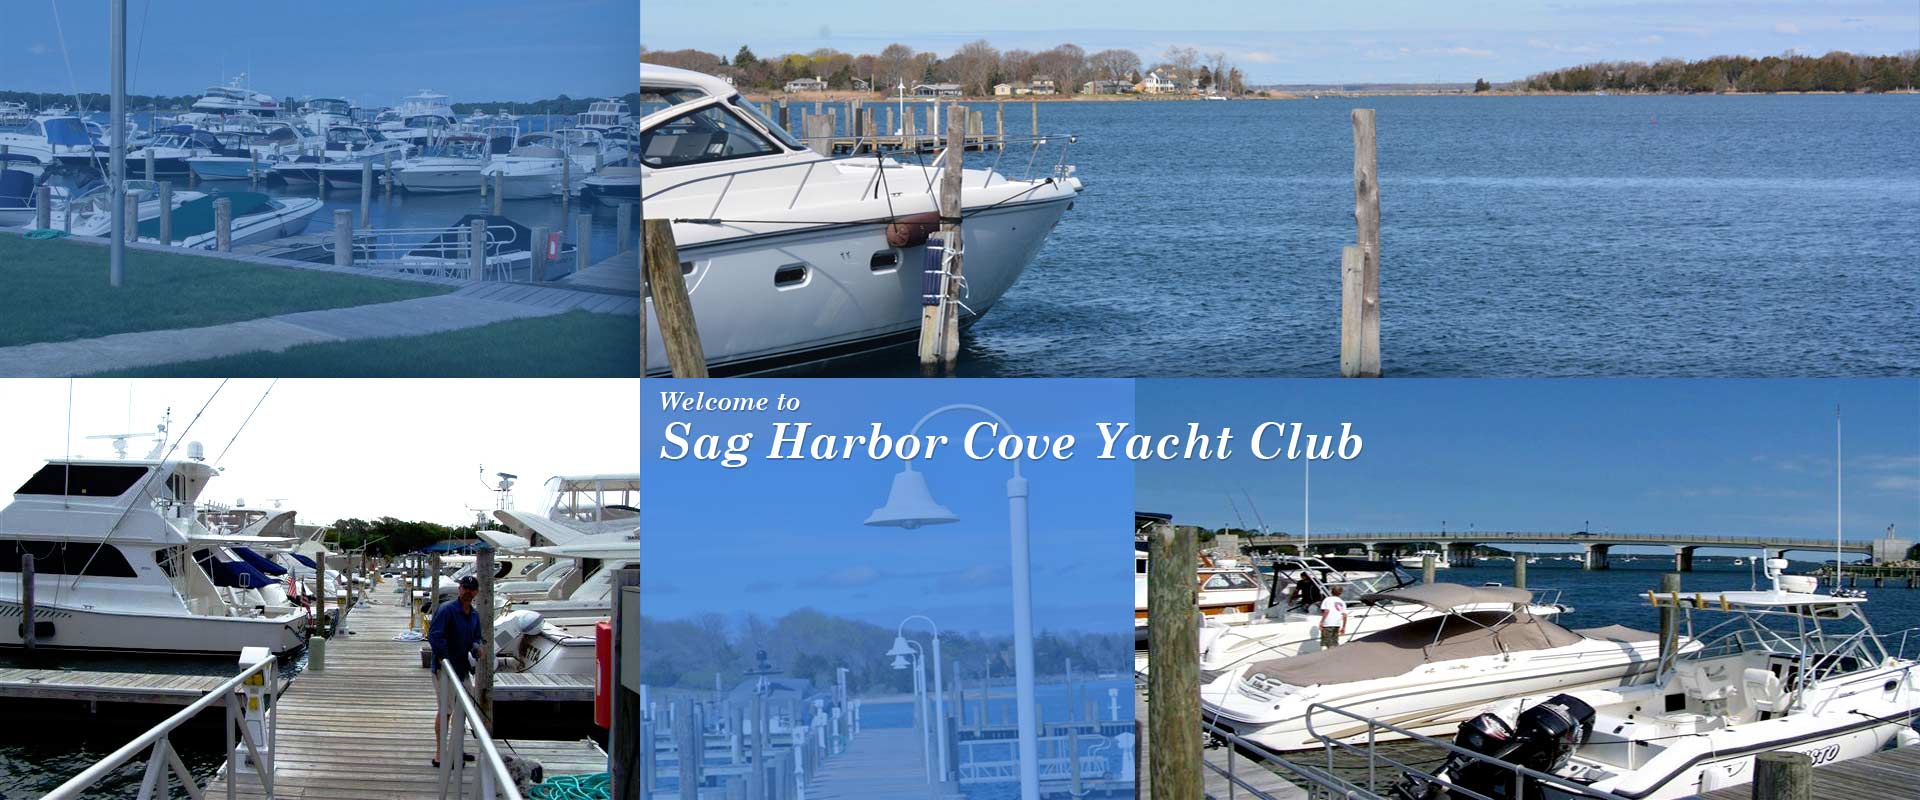 sag harbor cove yacht club